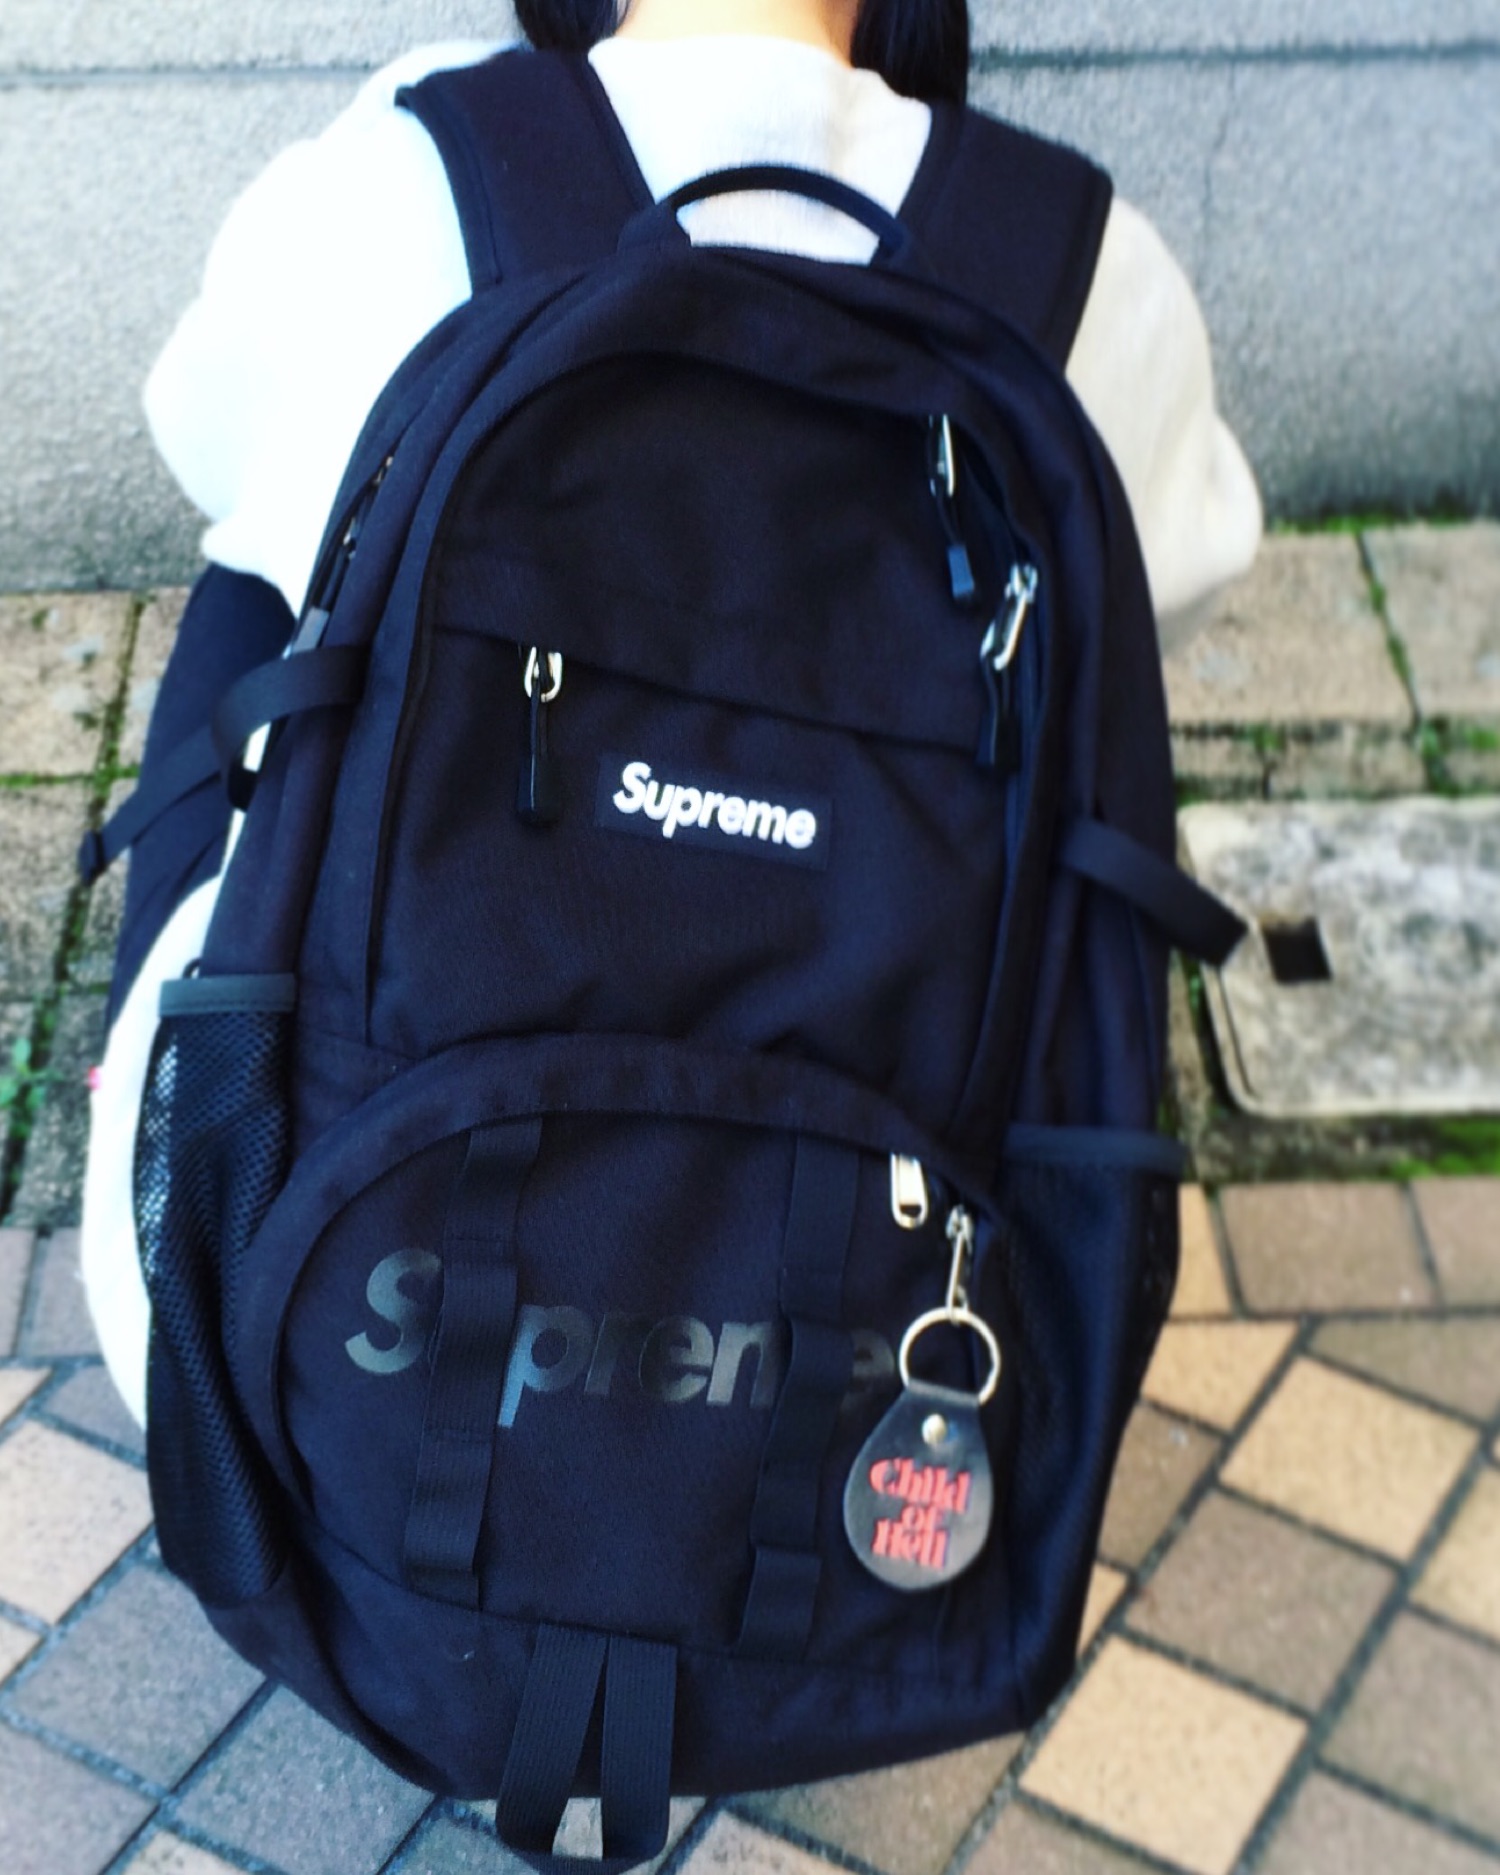 supreme 2015 backpack